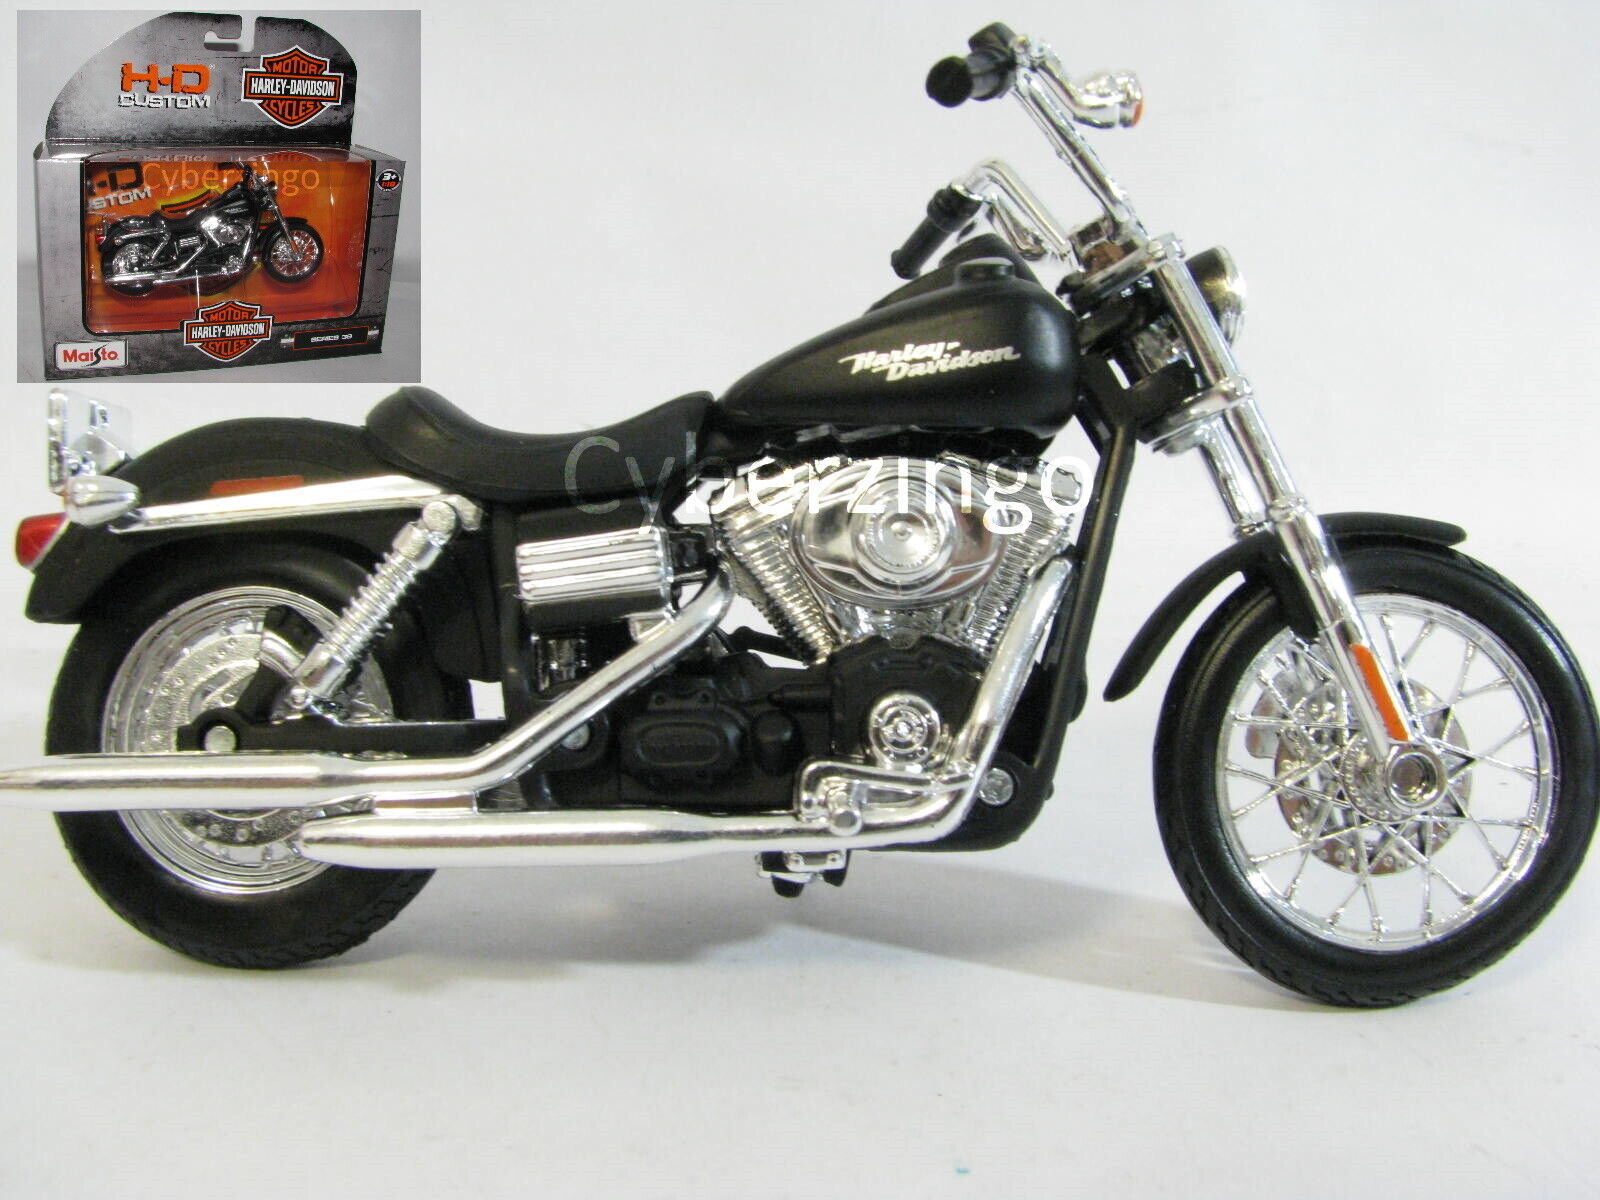 Harley Davidson 2006 Dyna Street Bob Matt Blk 1:18 Scale Maisto Motorcycle Model - $27.79